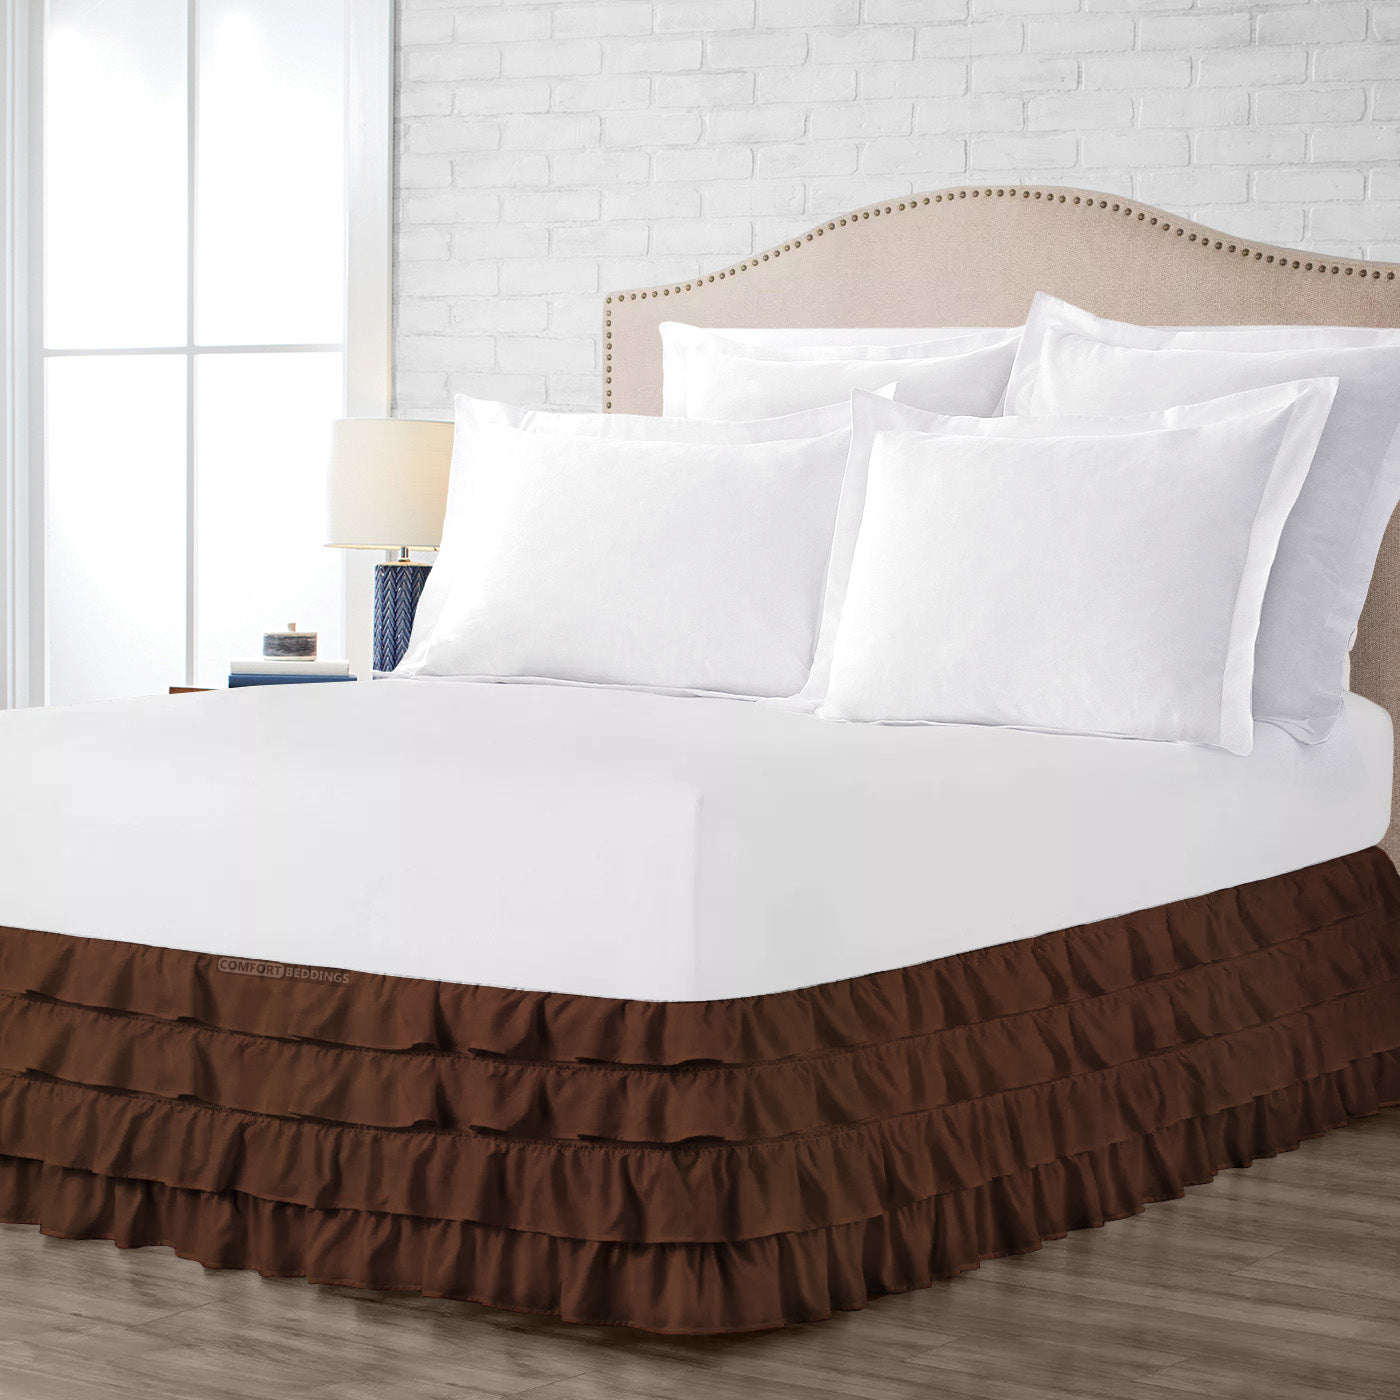 Egyptian cotton made chocolate waterfall ruffled bed skirt